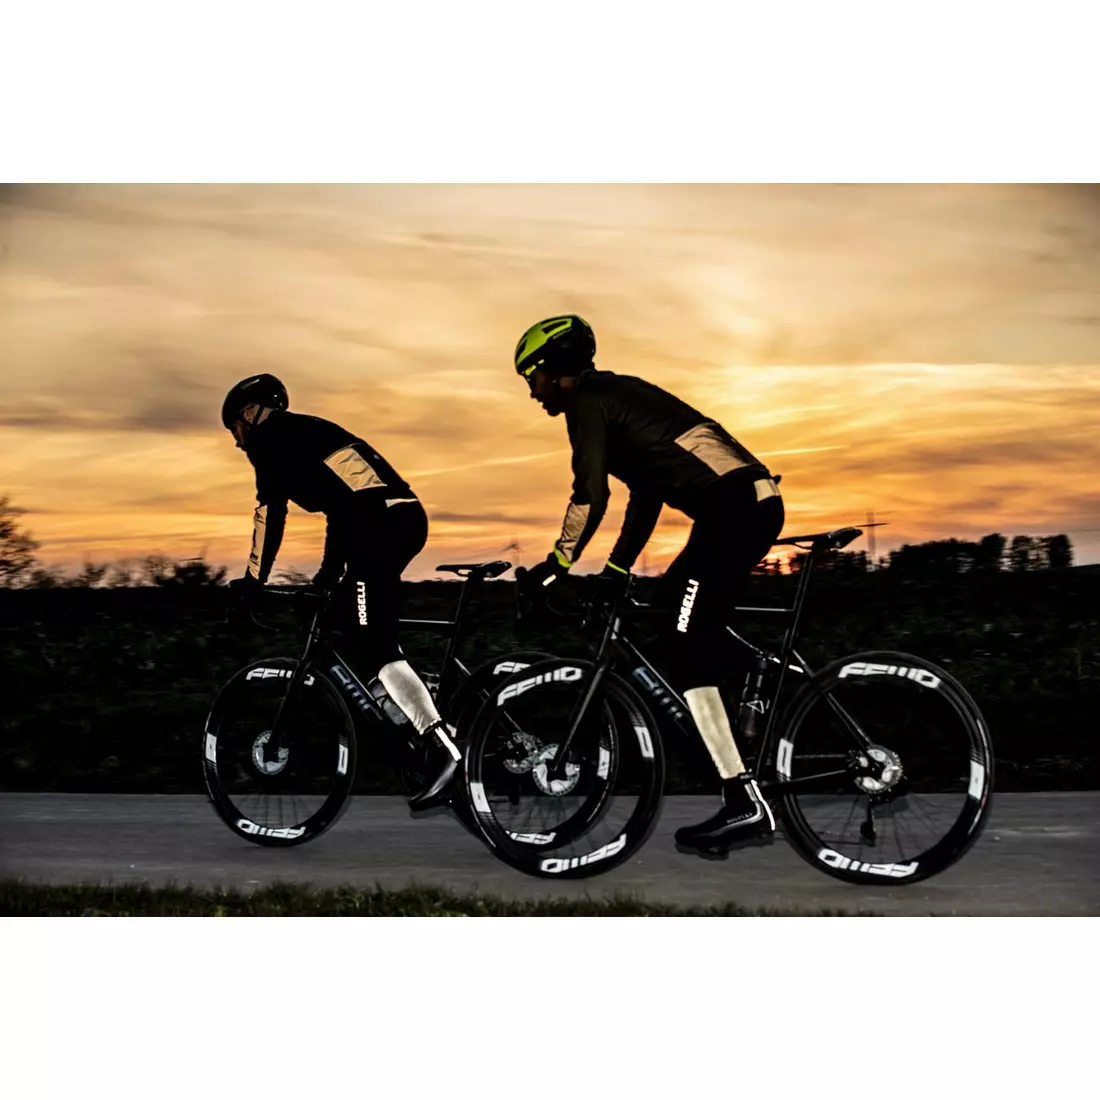 Rogelli Pantaloni de bărbați cu izolație pentru ciclism ESSENTIAL HI VIS negru ROG351016